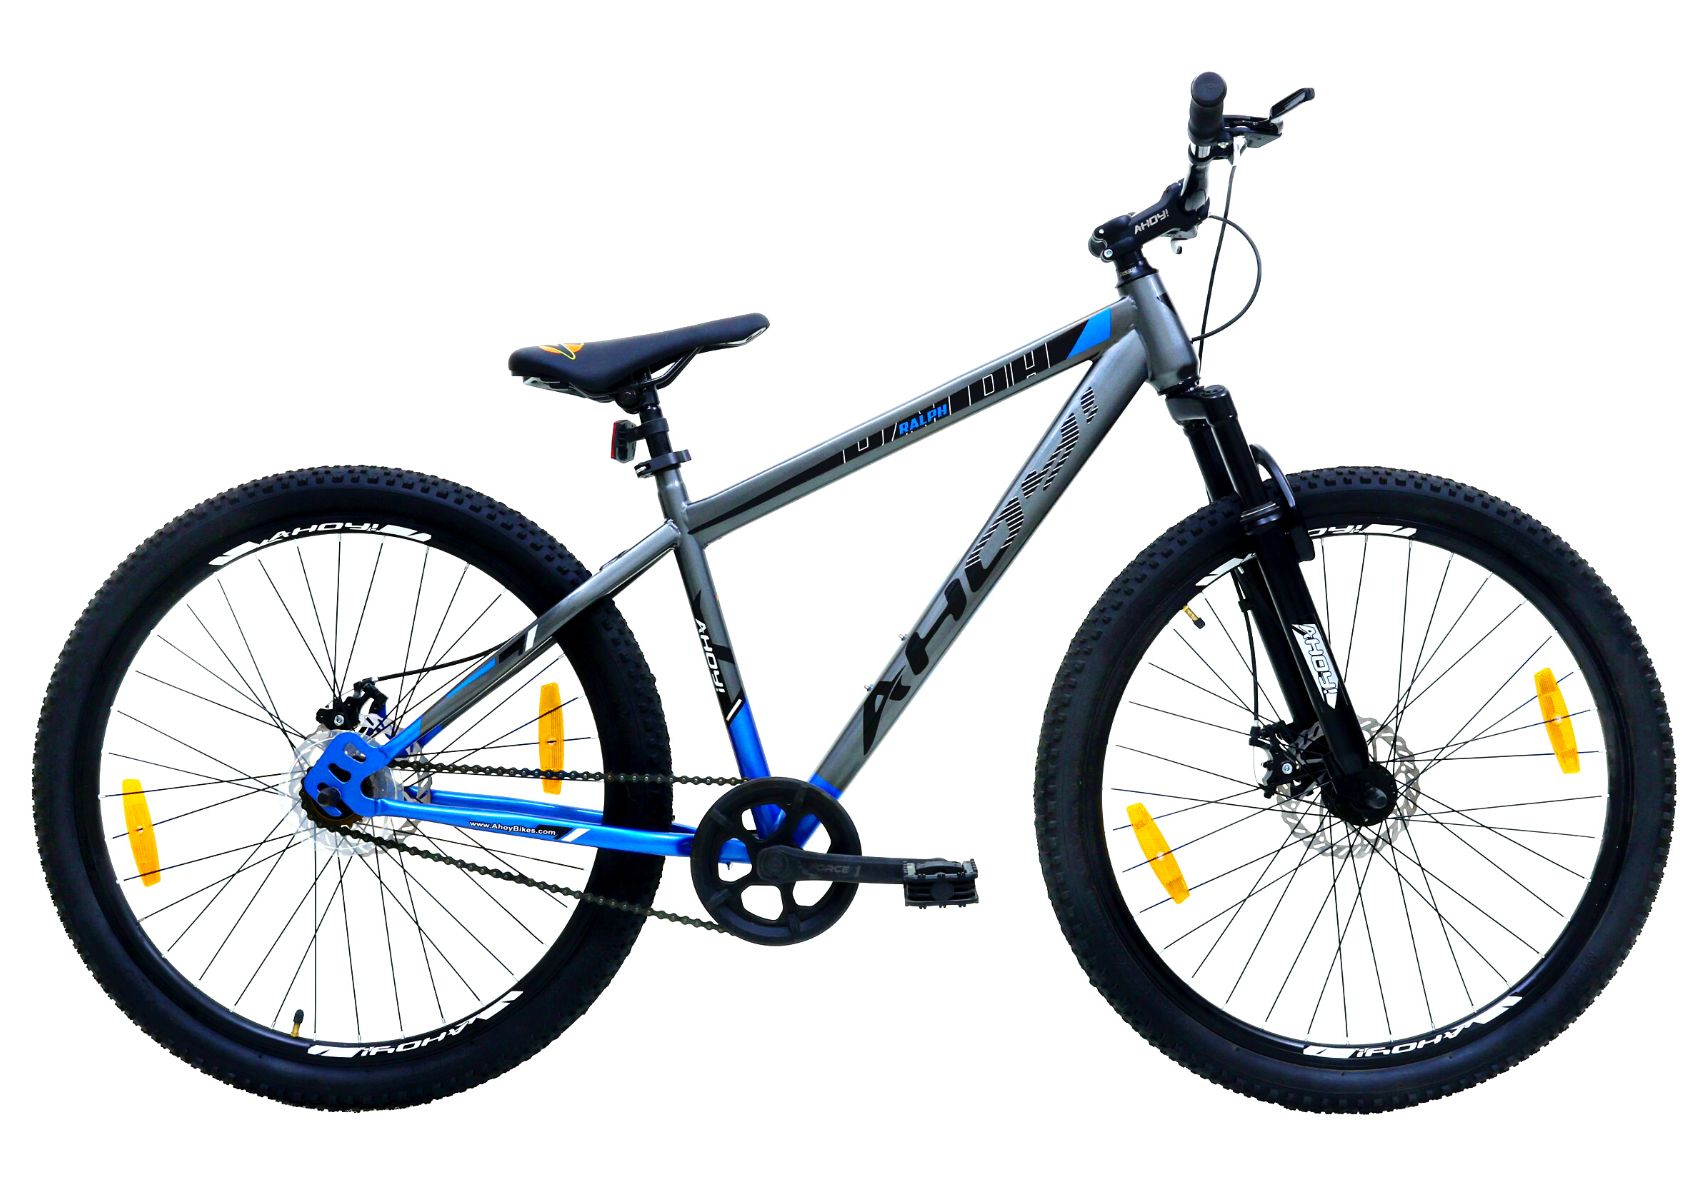 Ralph All Terrain Bike 29T | Buy Grey Non Gear Cycle for Men